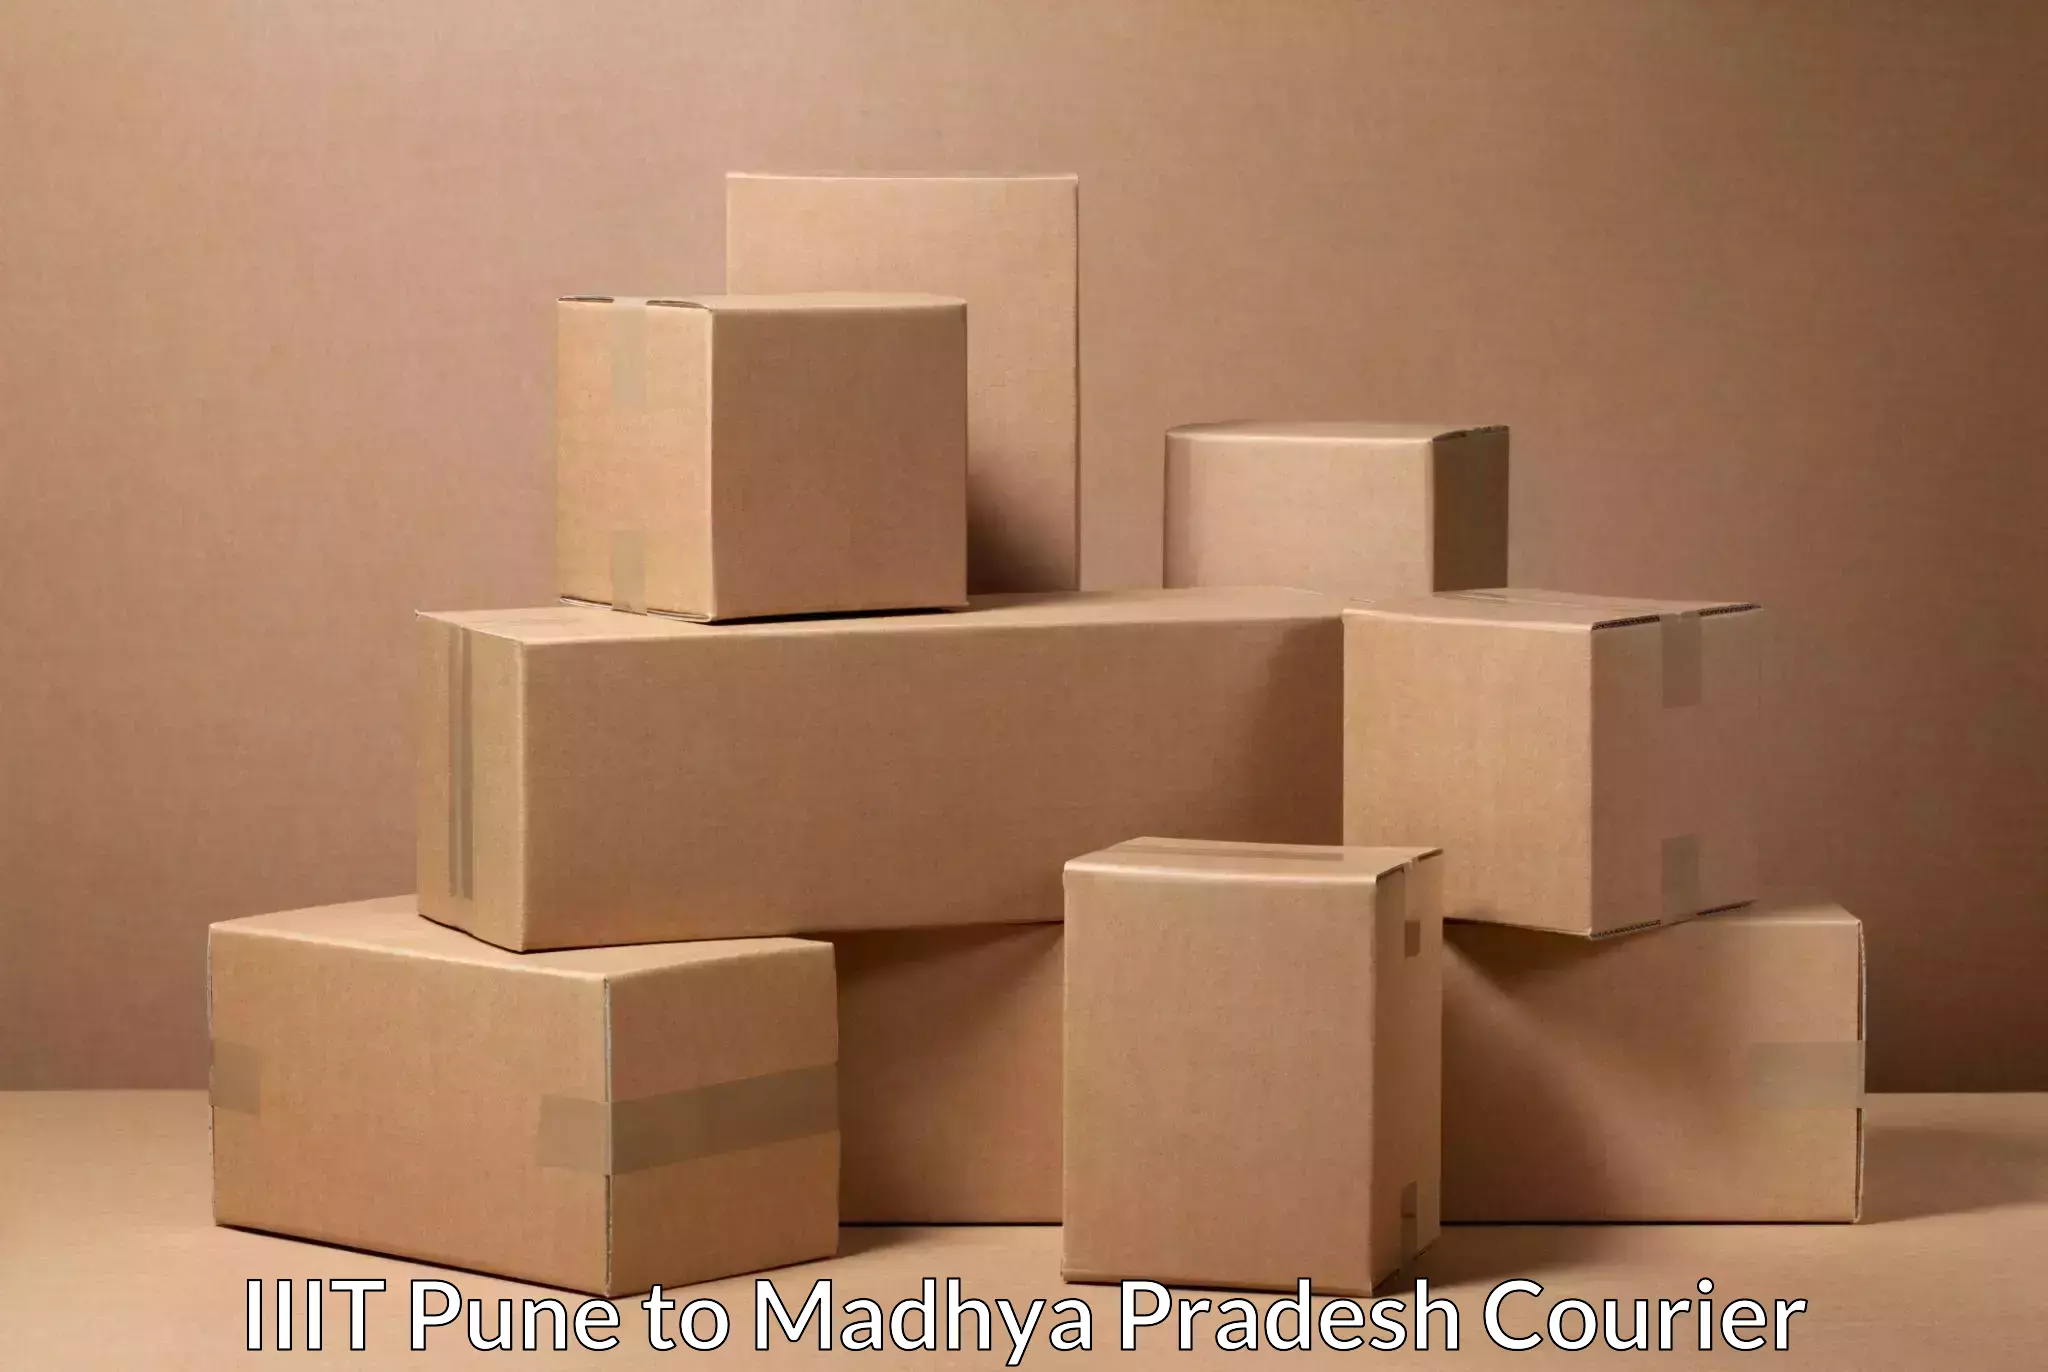 Express logistics providers IIIT Pune to Mandla